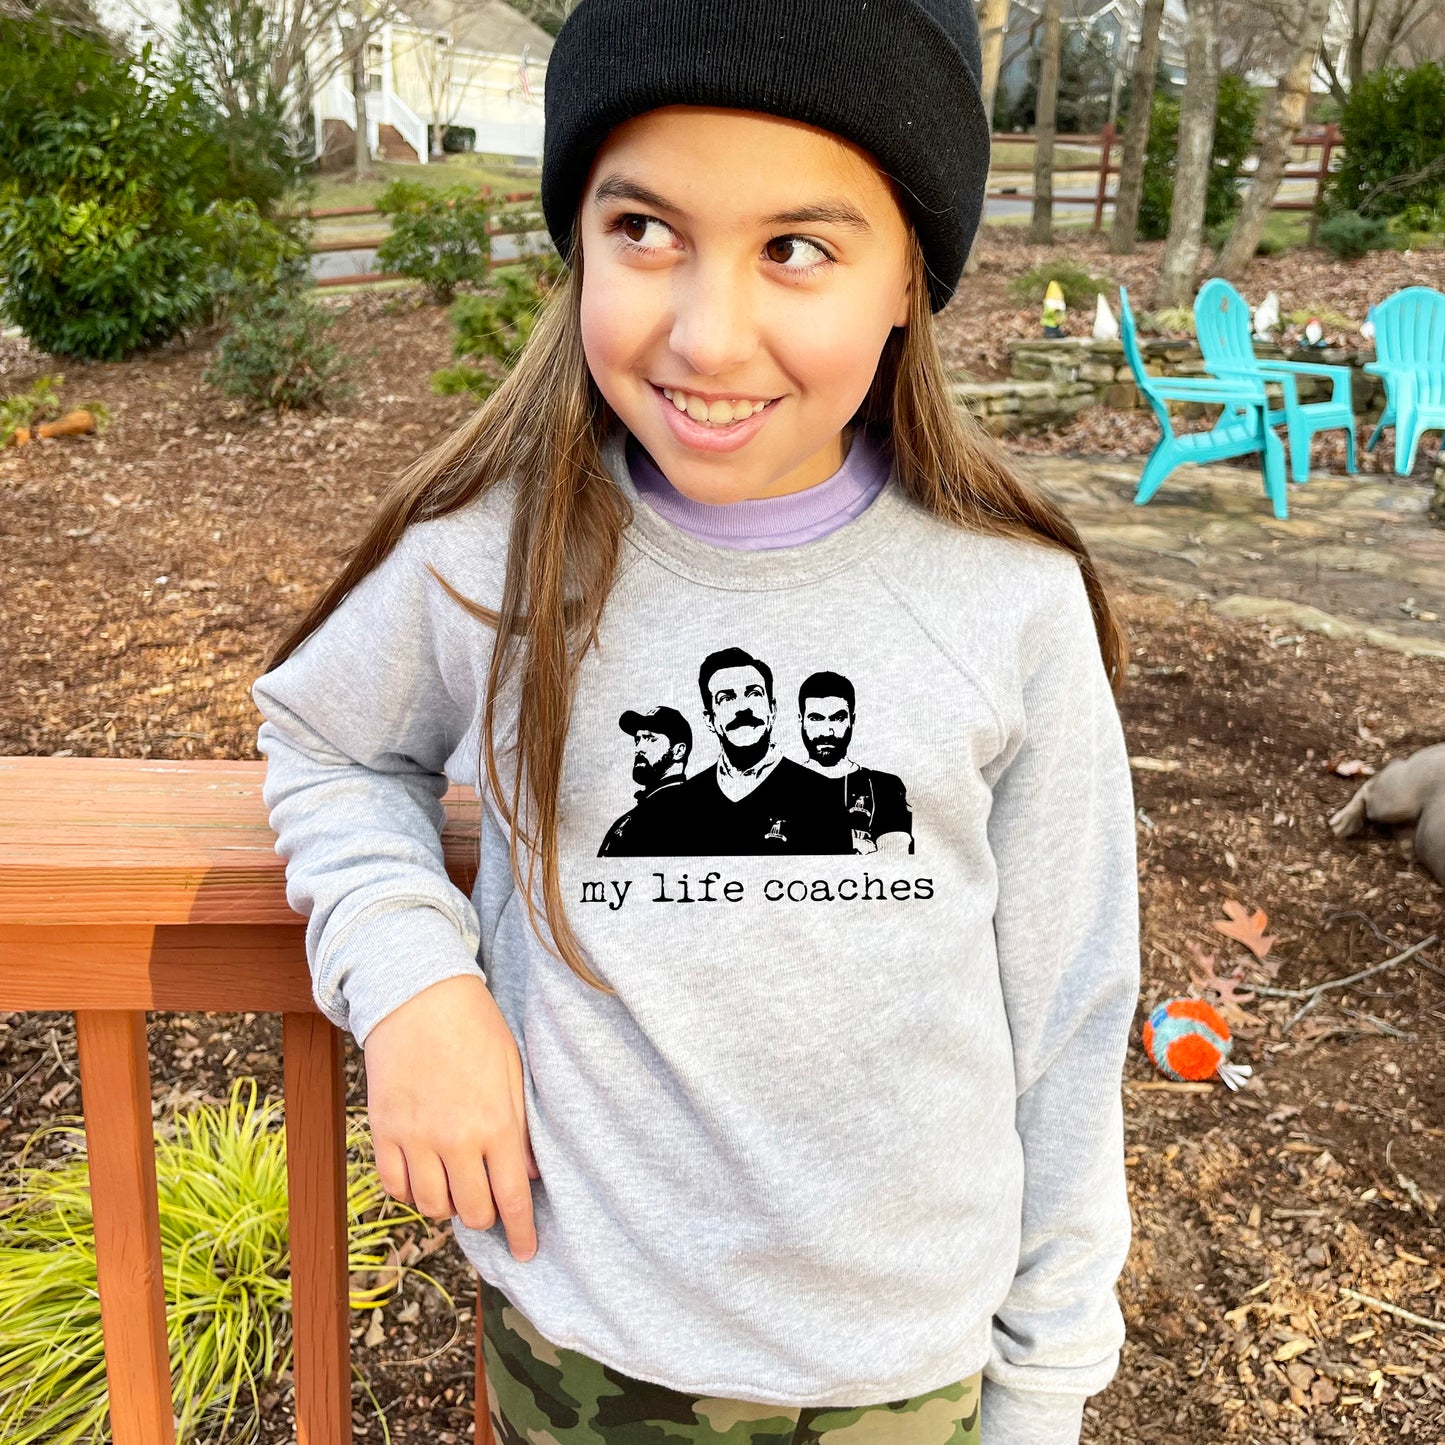 My Life Coaches (Ted Lasso) - Kid's Sweatshirt - Heather Gray or Mauve